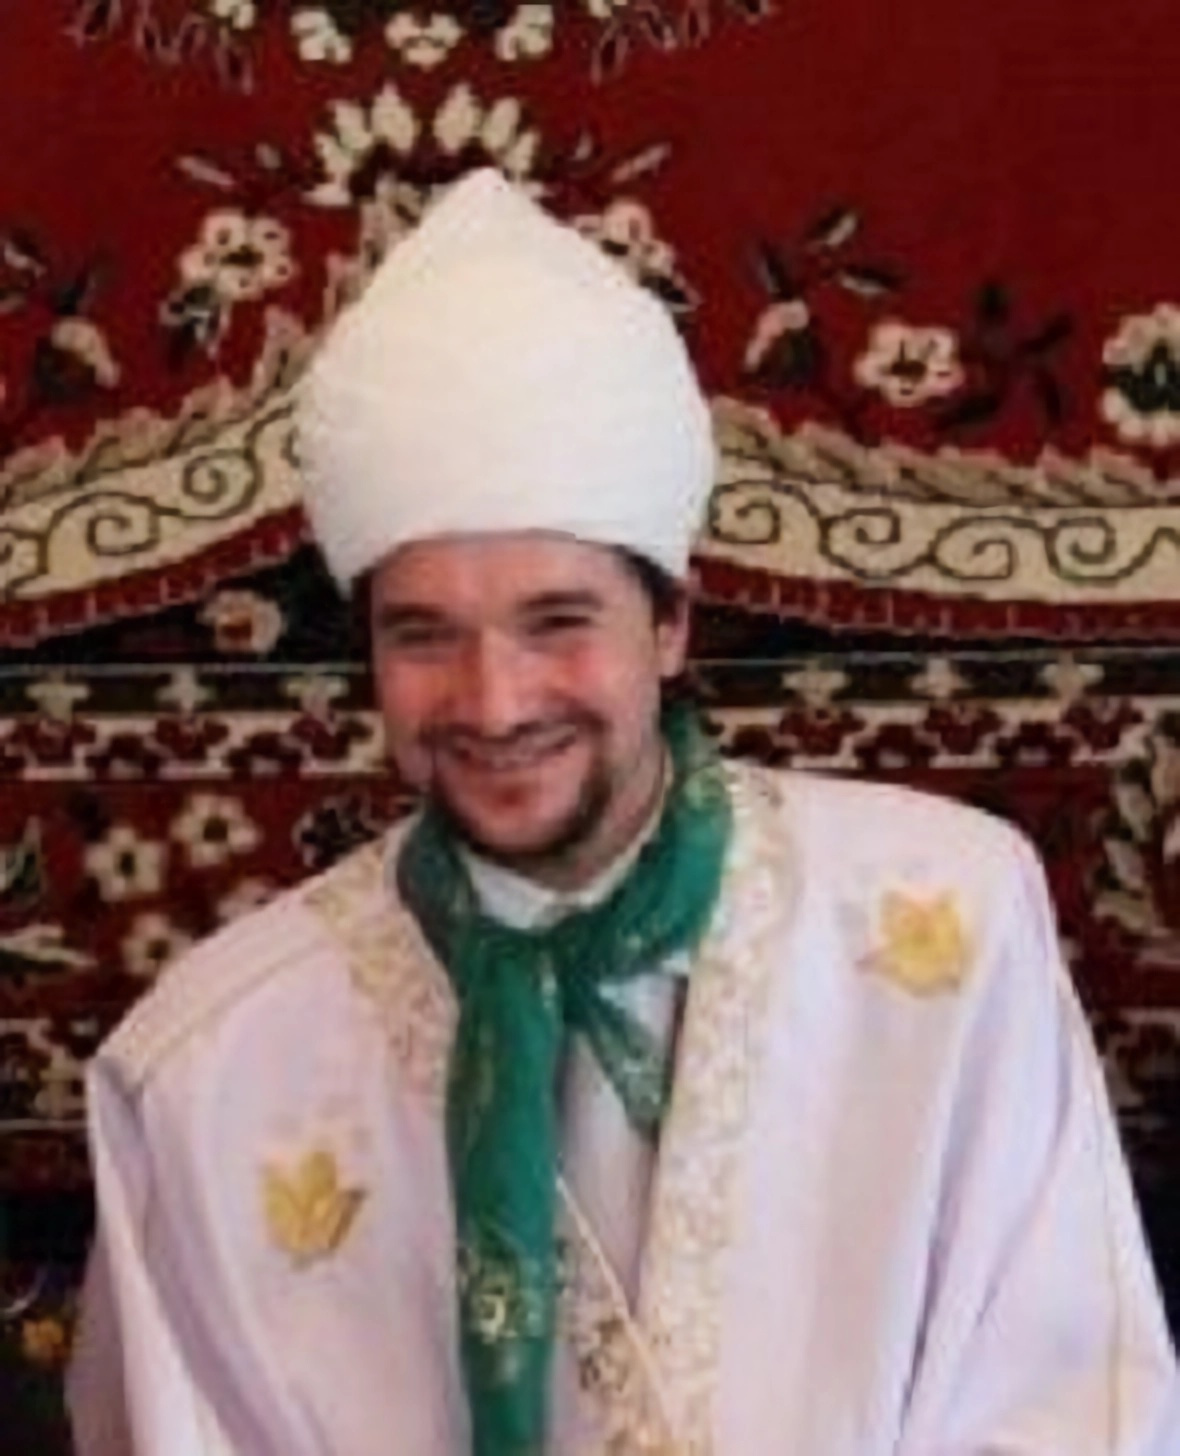 Муххамад — муфтий Башкирии в структуре ЦДУМ